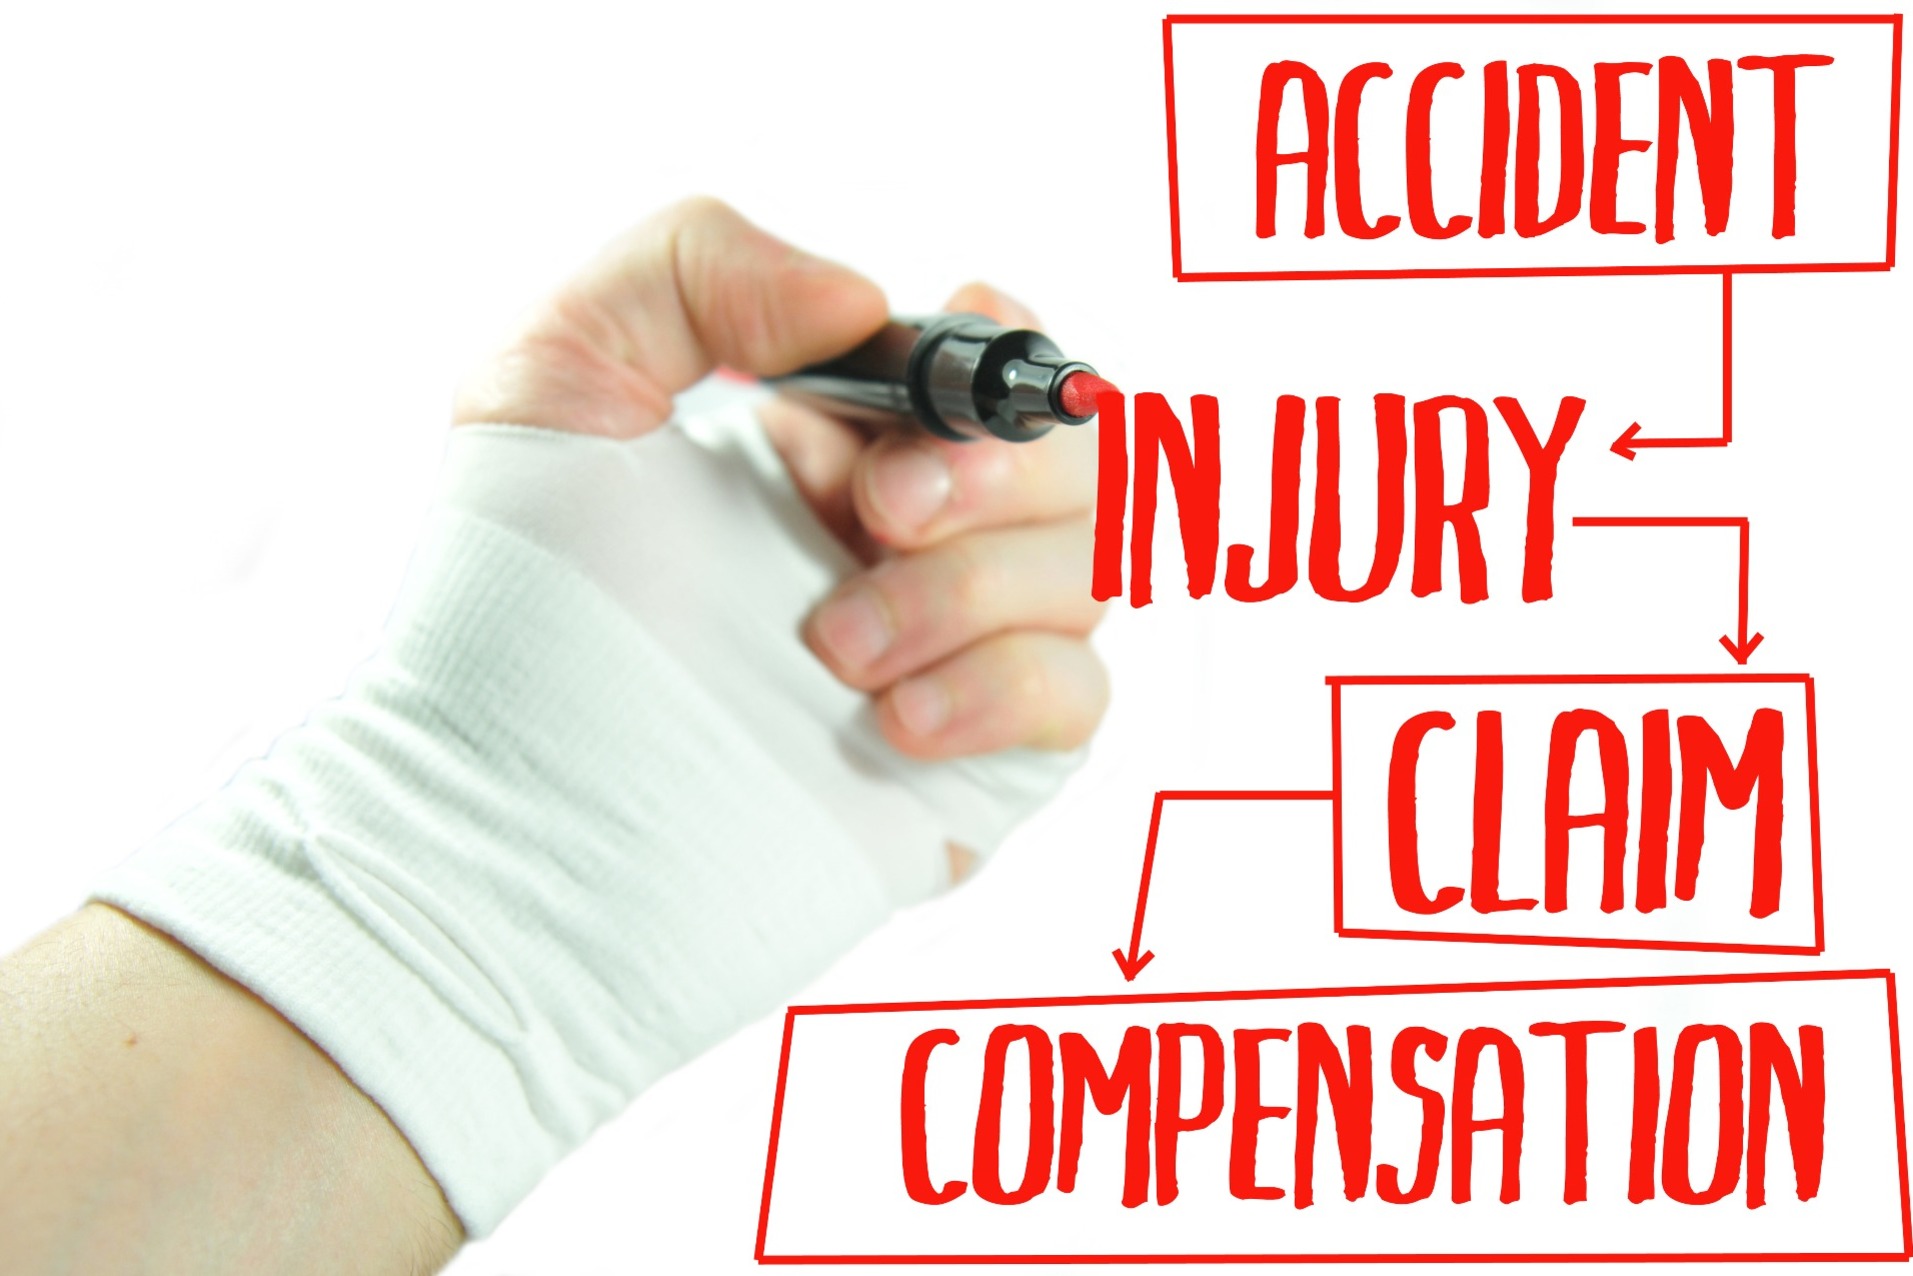 Accident > Injury > Claim > Compensation.